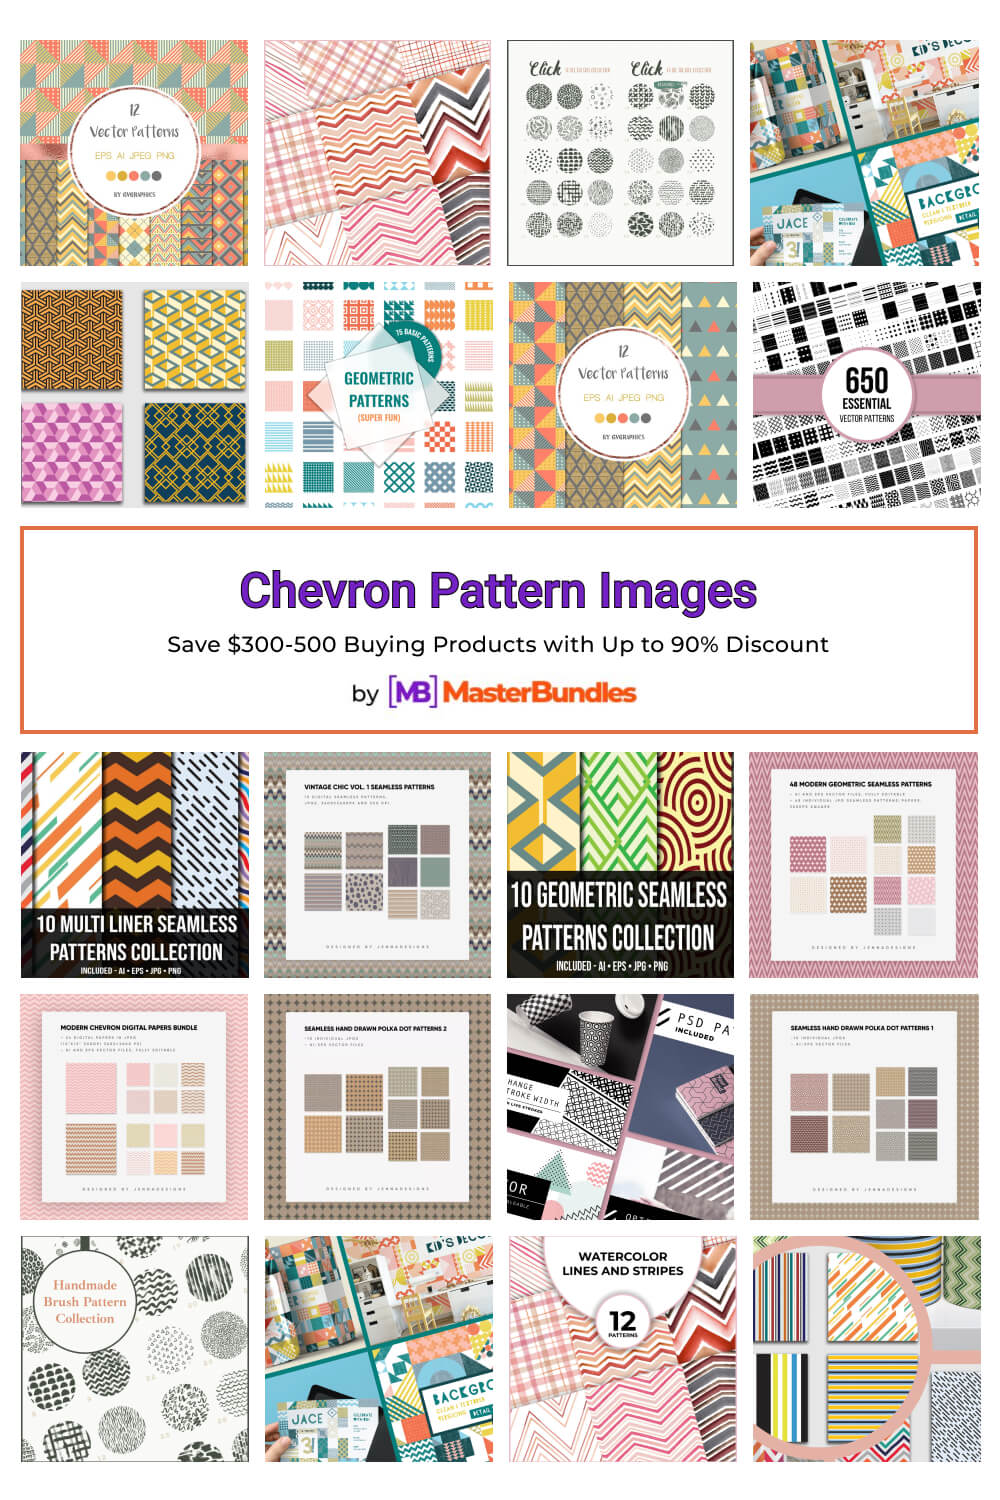 chevron pattern images pinterest image.